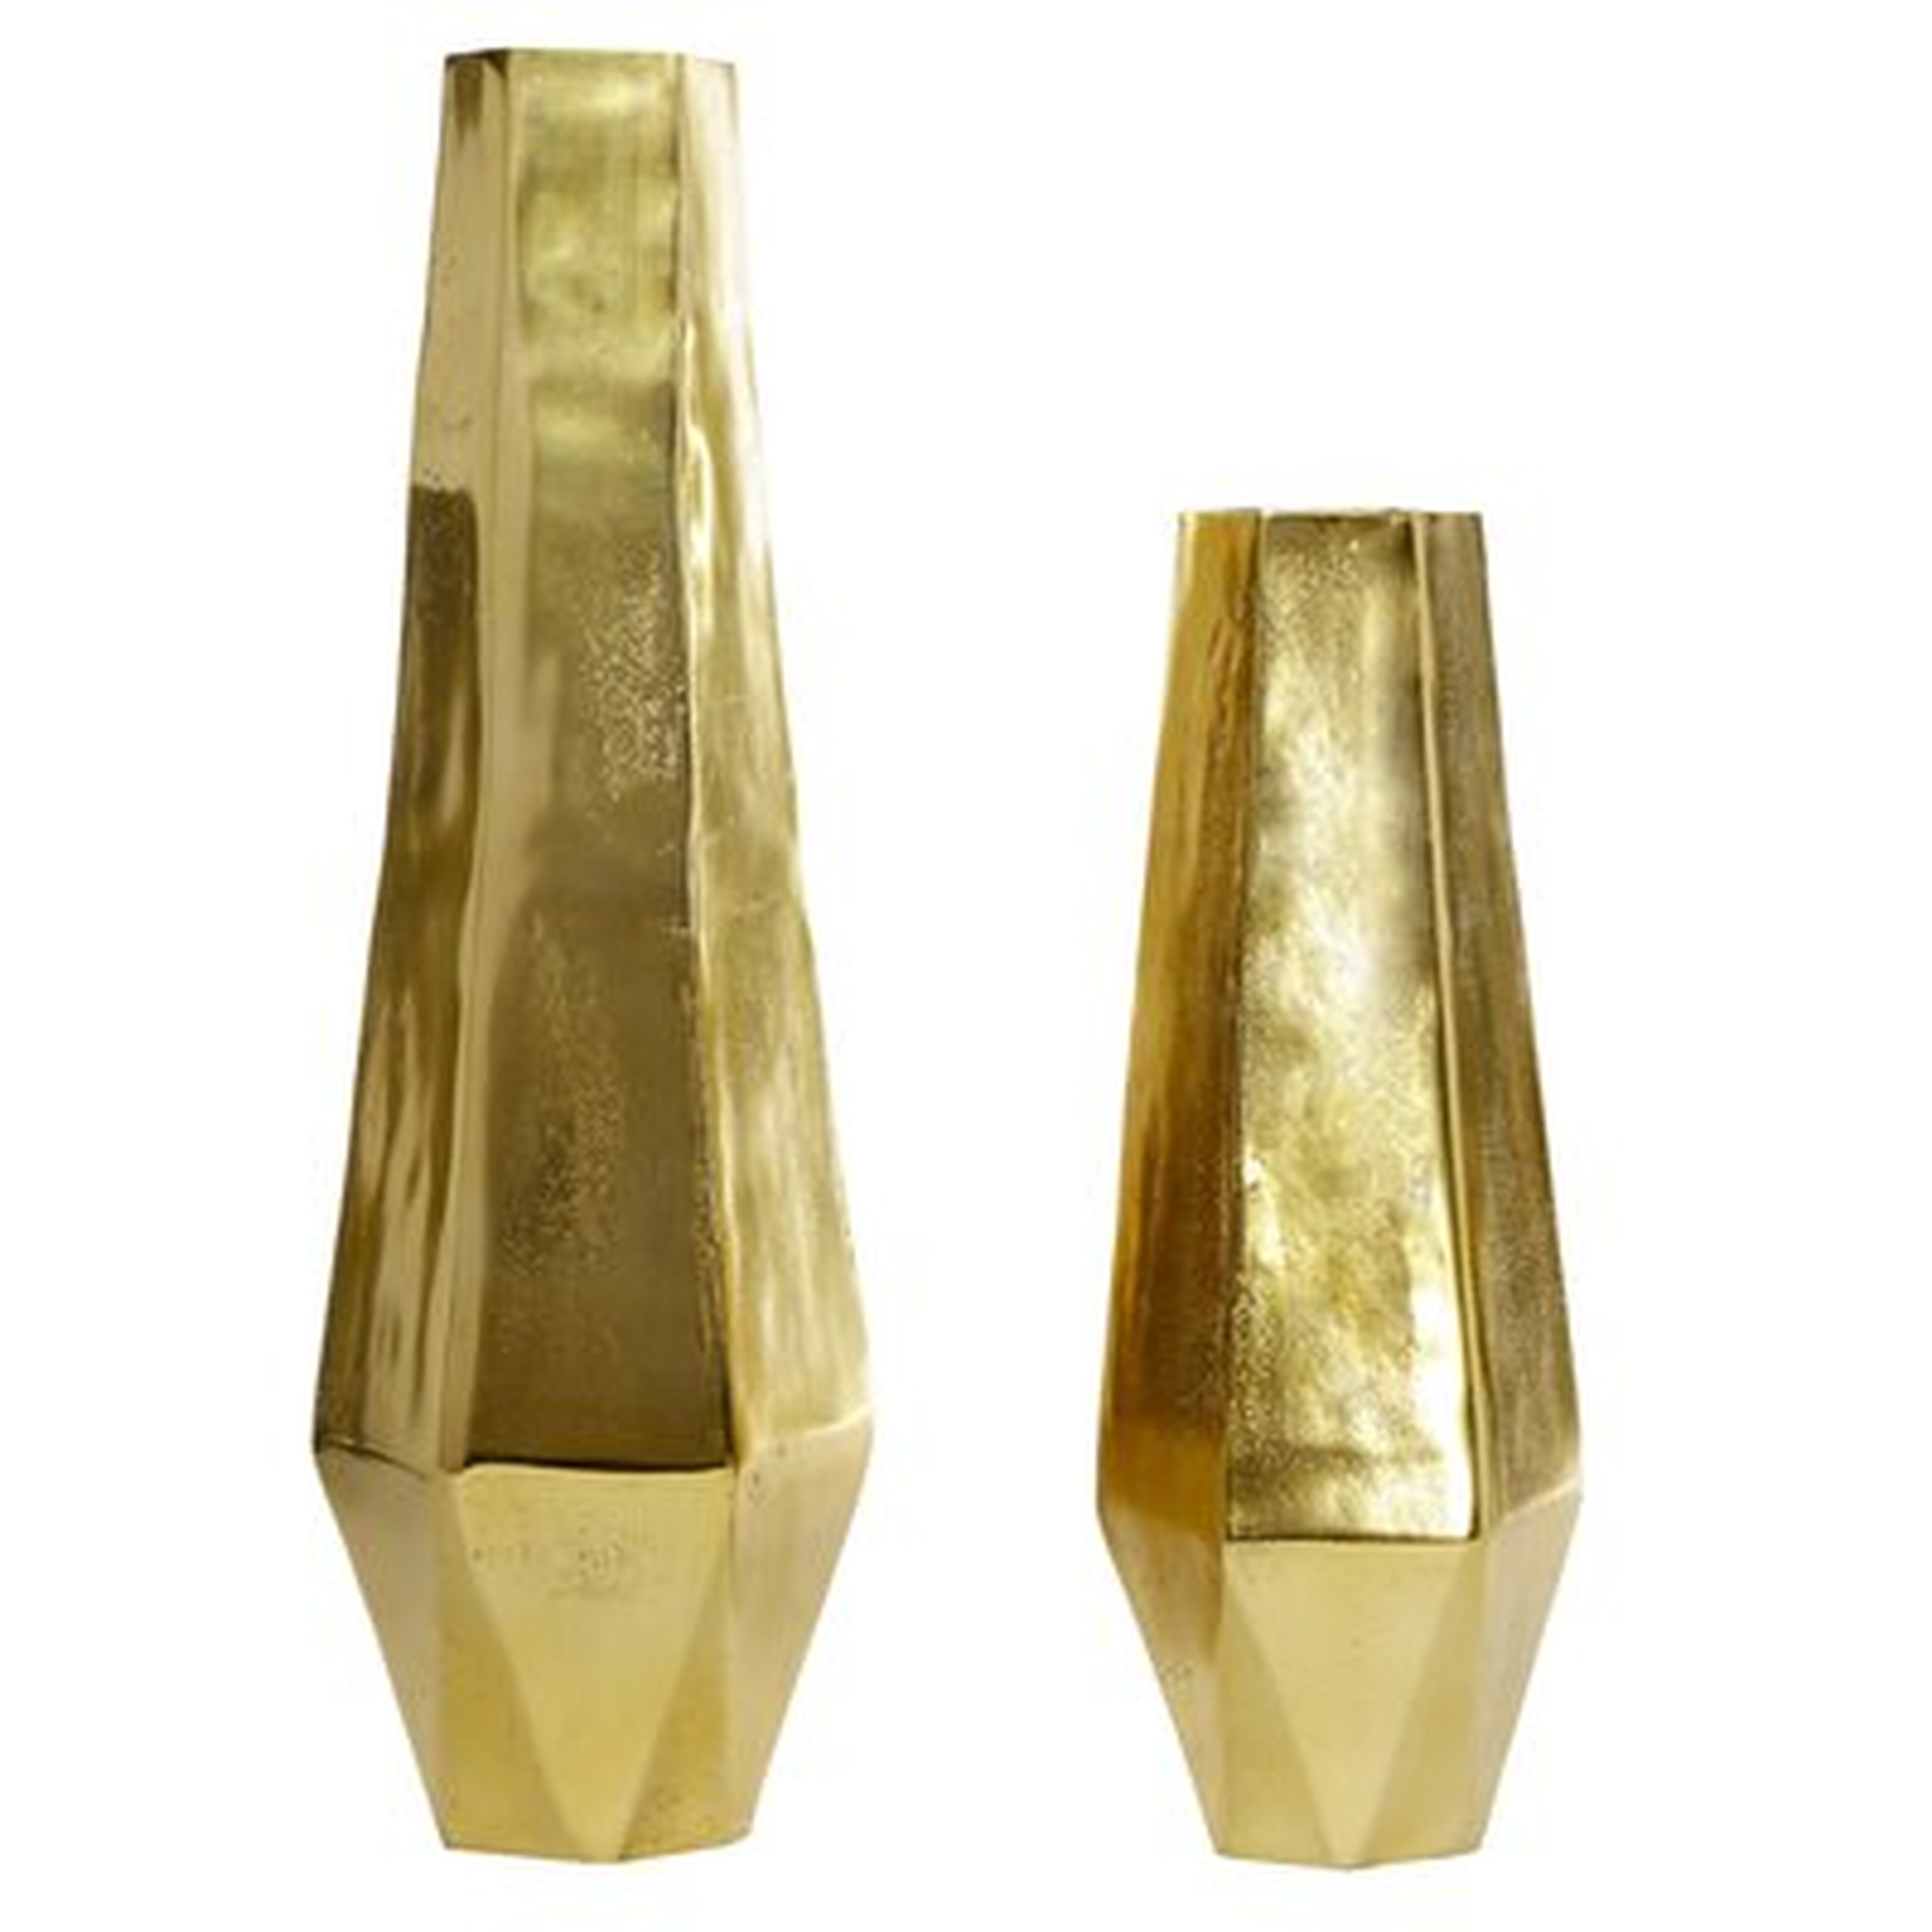 2 Piece Gold Aluminum Table Vase Set - Wayfair